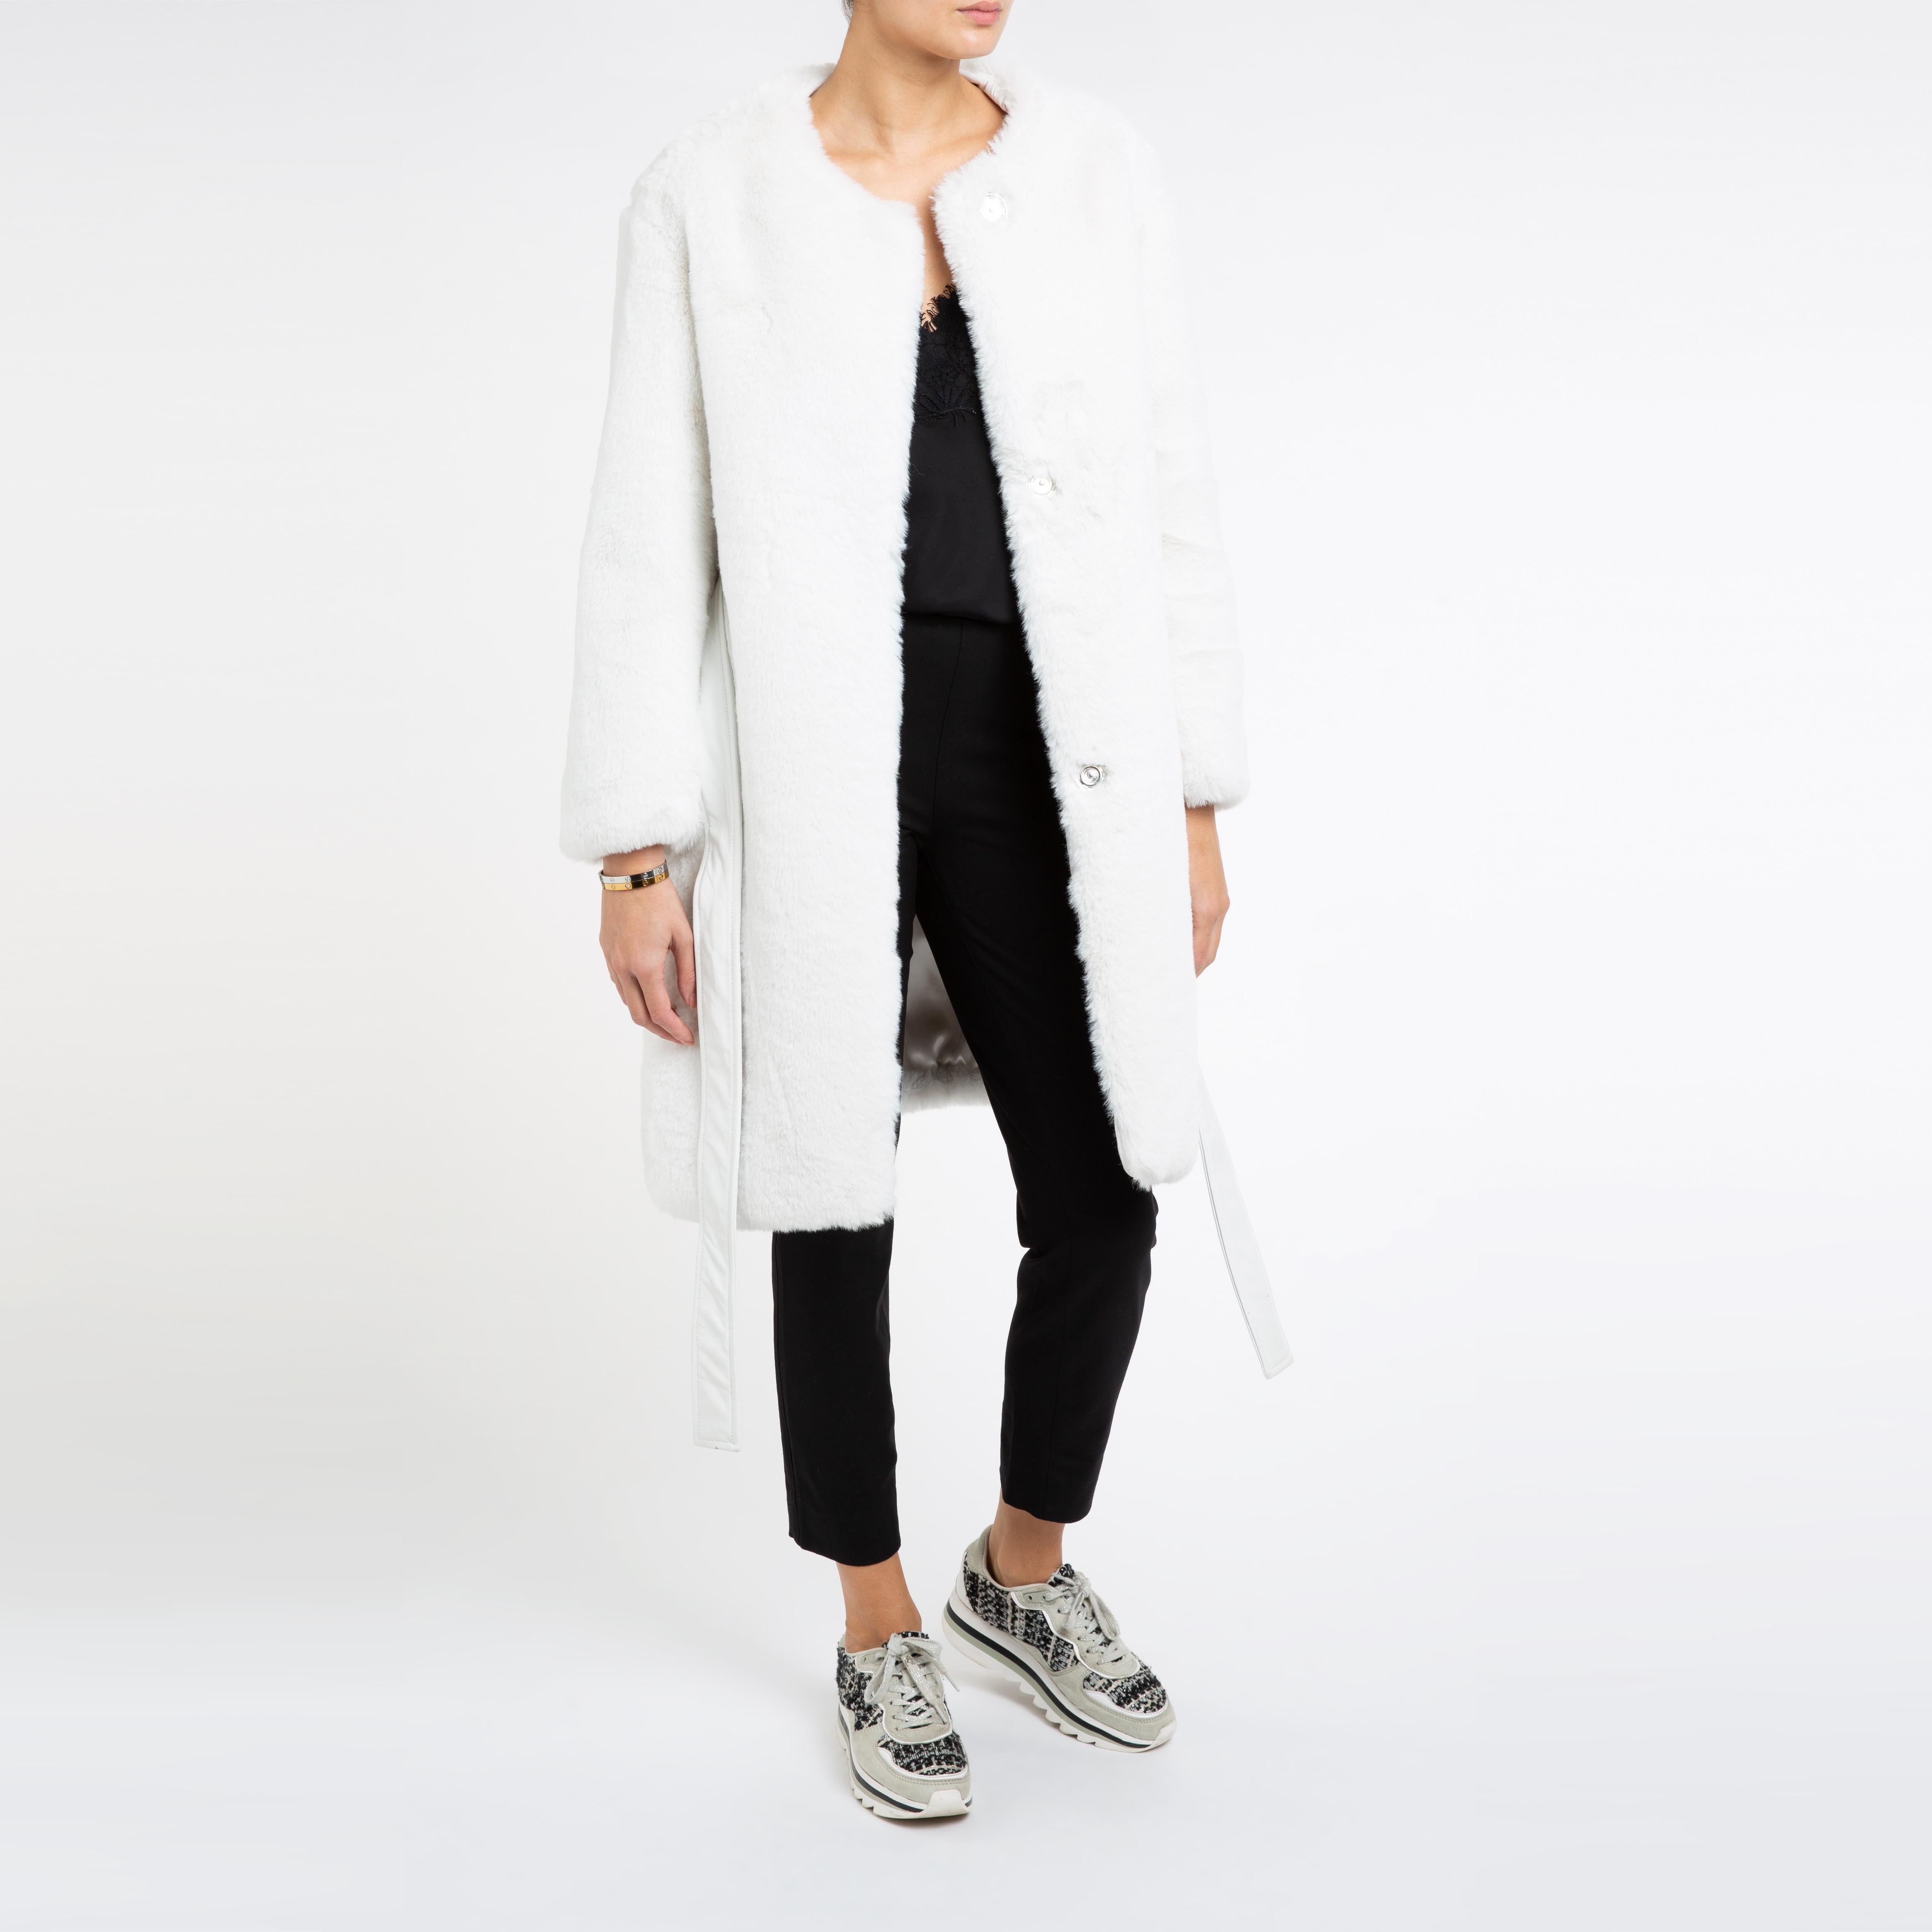 Verheyen London Serena  Collarless Faux Fur Coat in White - Size uk 10  For Sale 1